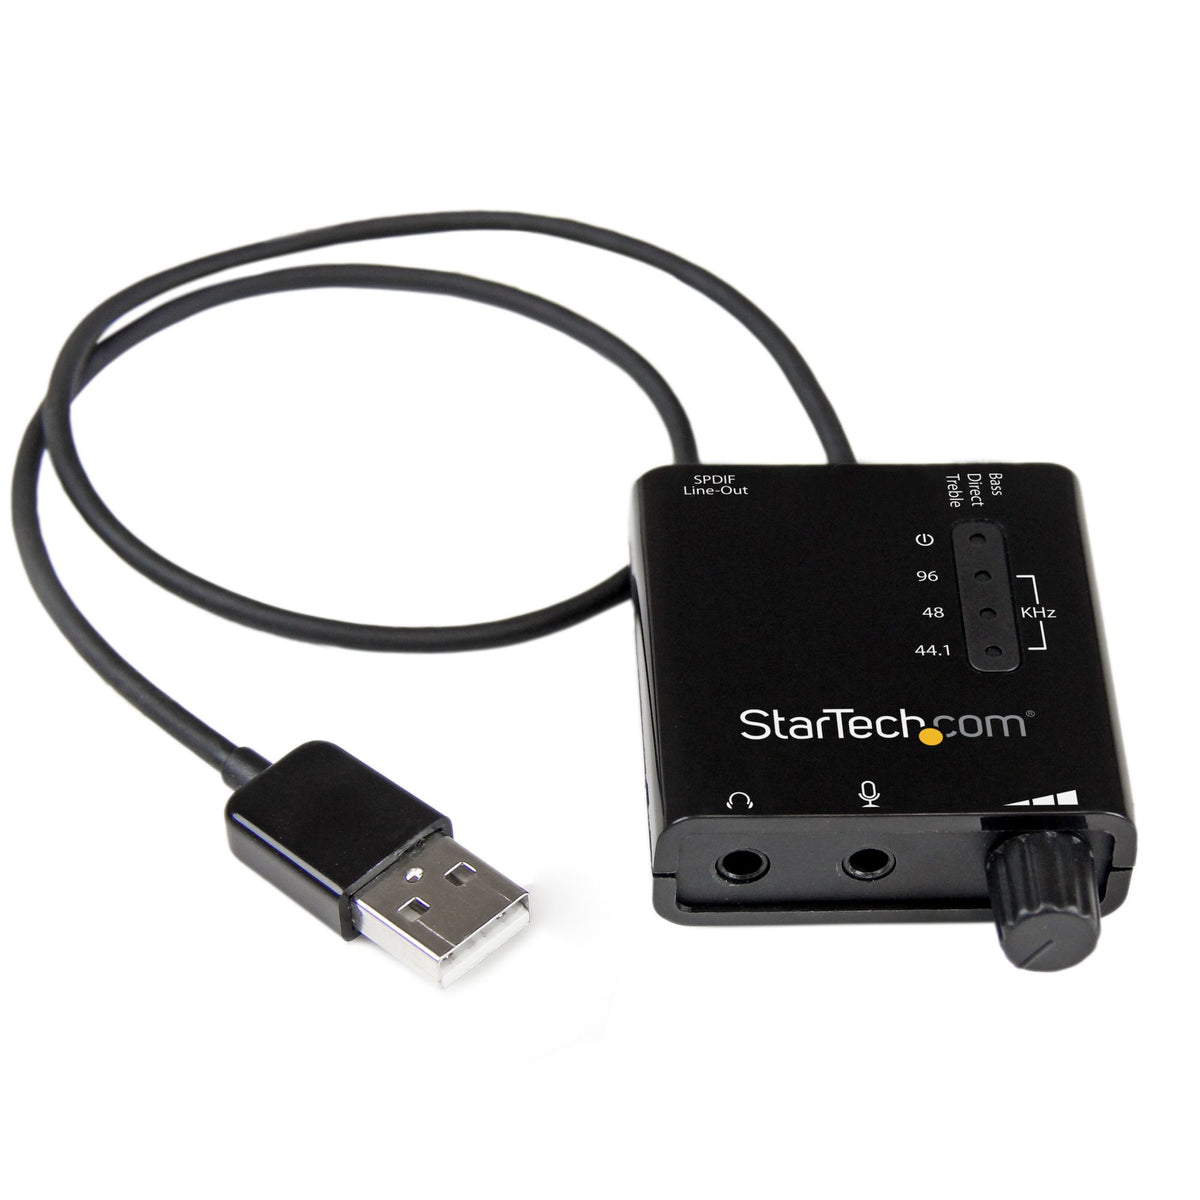 ICUSBAUDIO2D - StarTech.com - audio card 5.1 channels USB